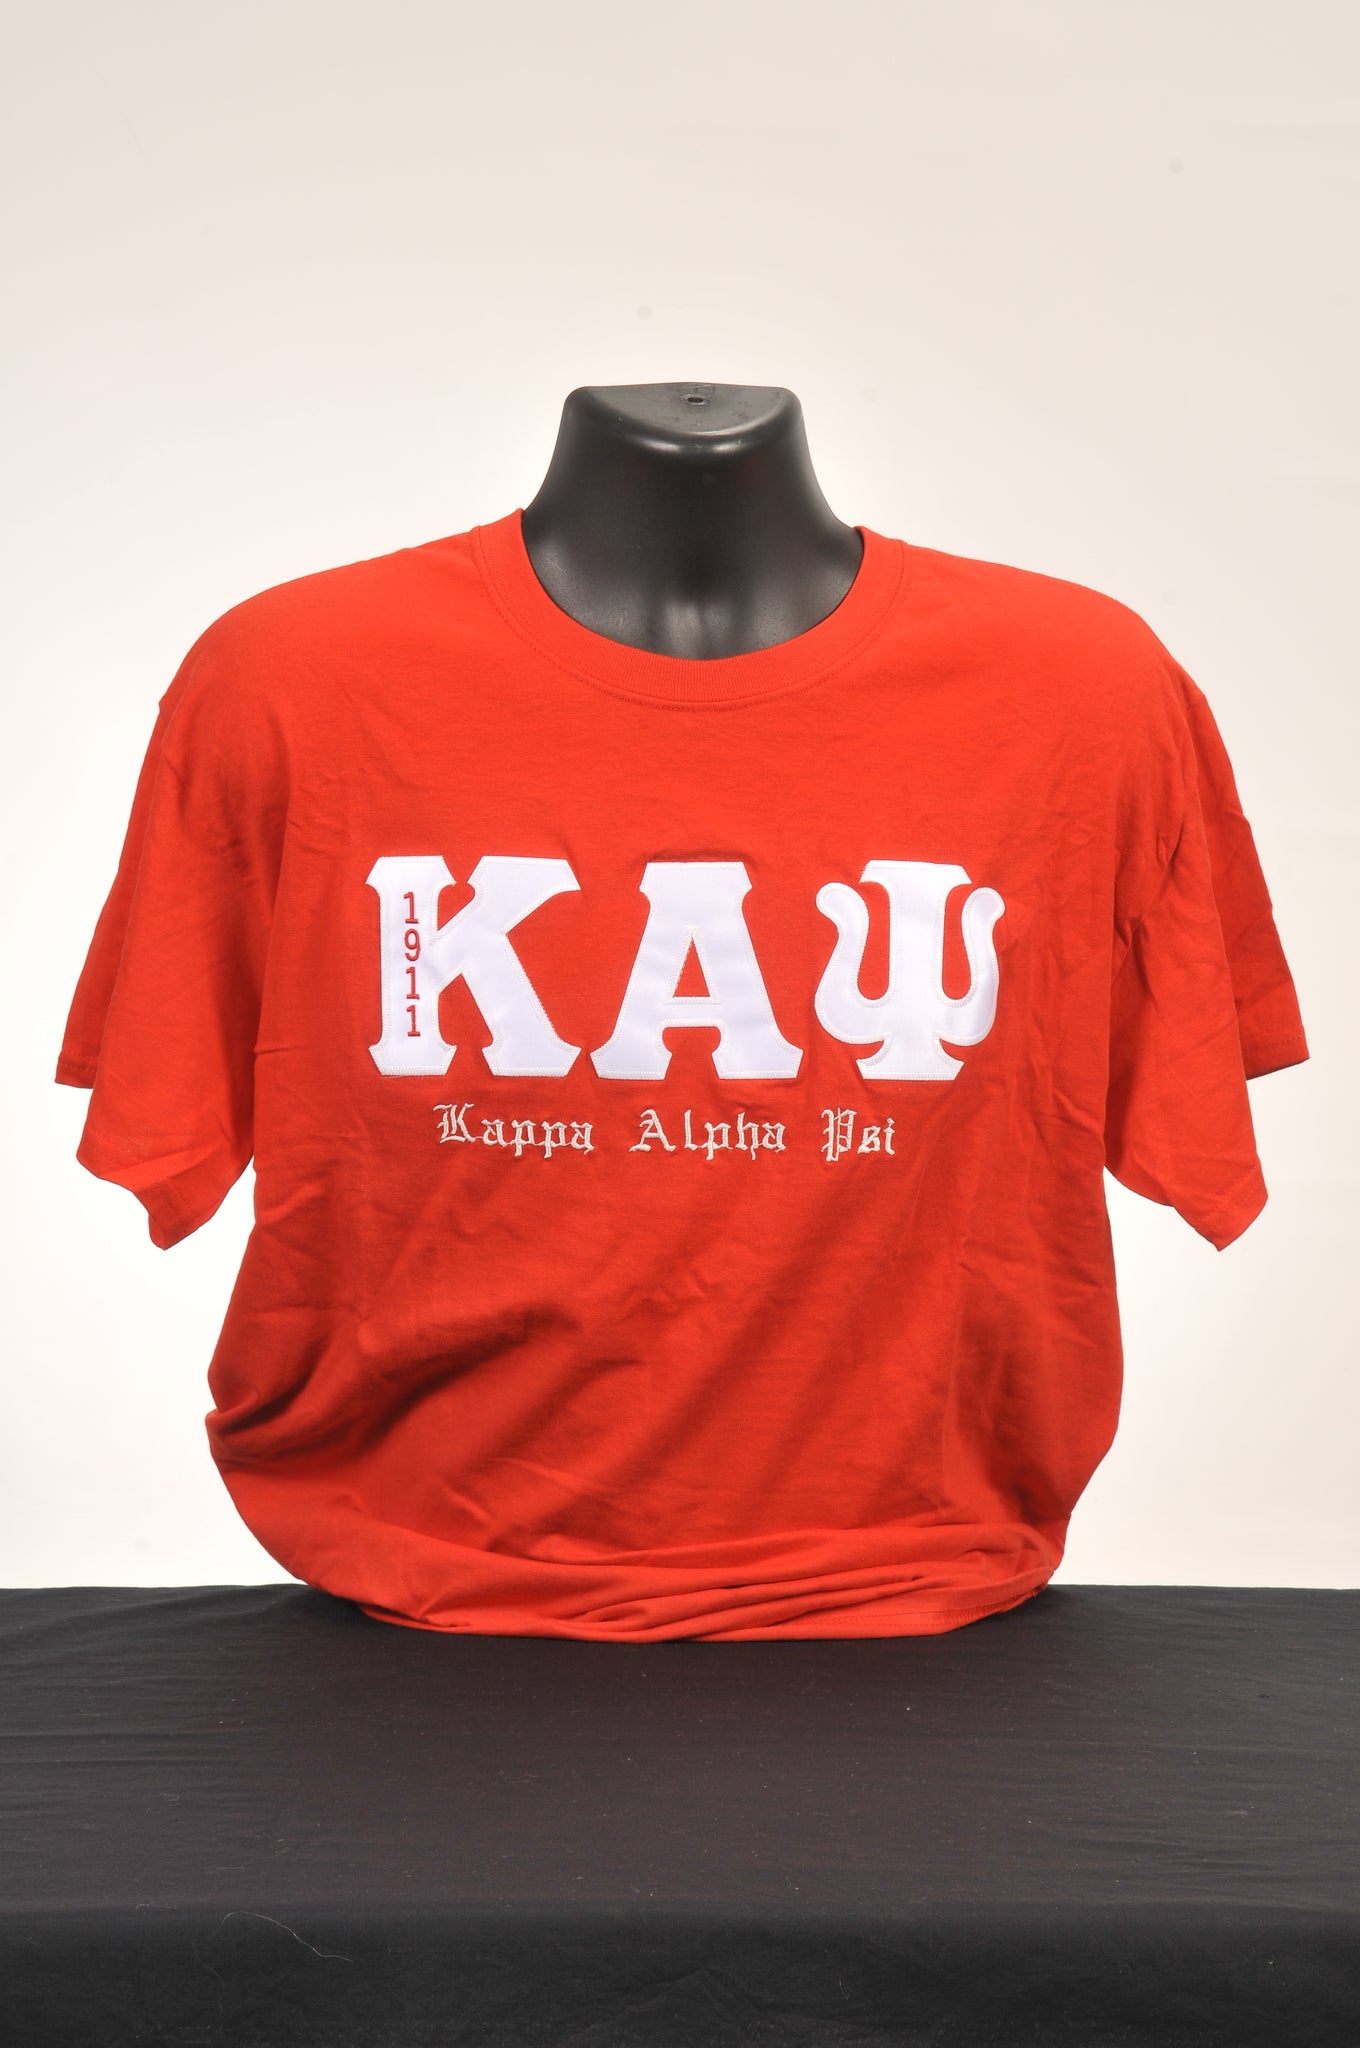 Kappa Alpha Psi Men\'s Applique Shirt – Soror Bling